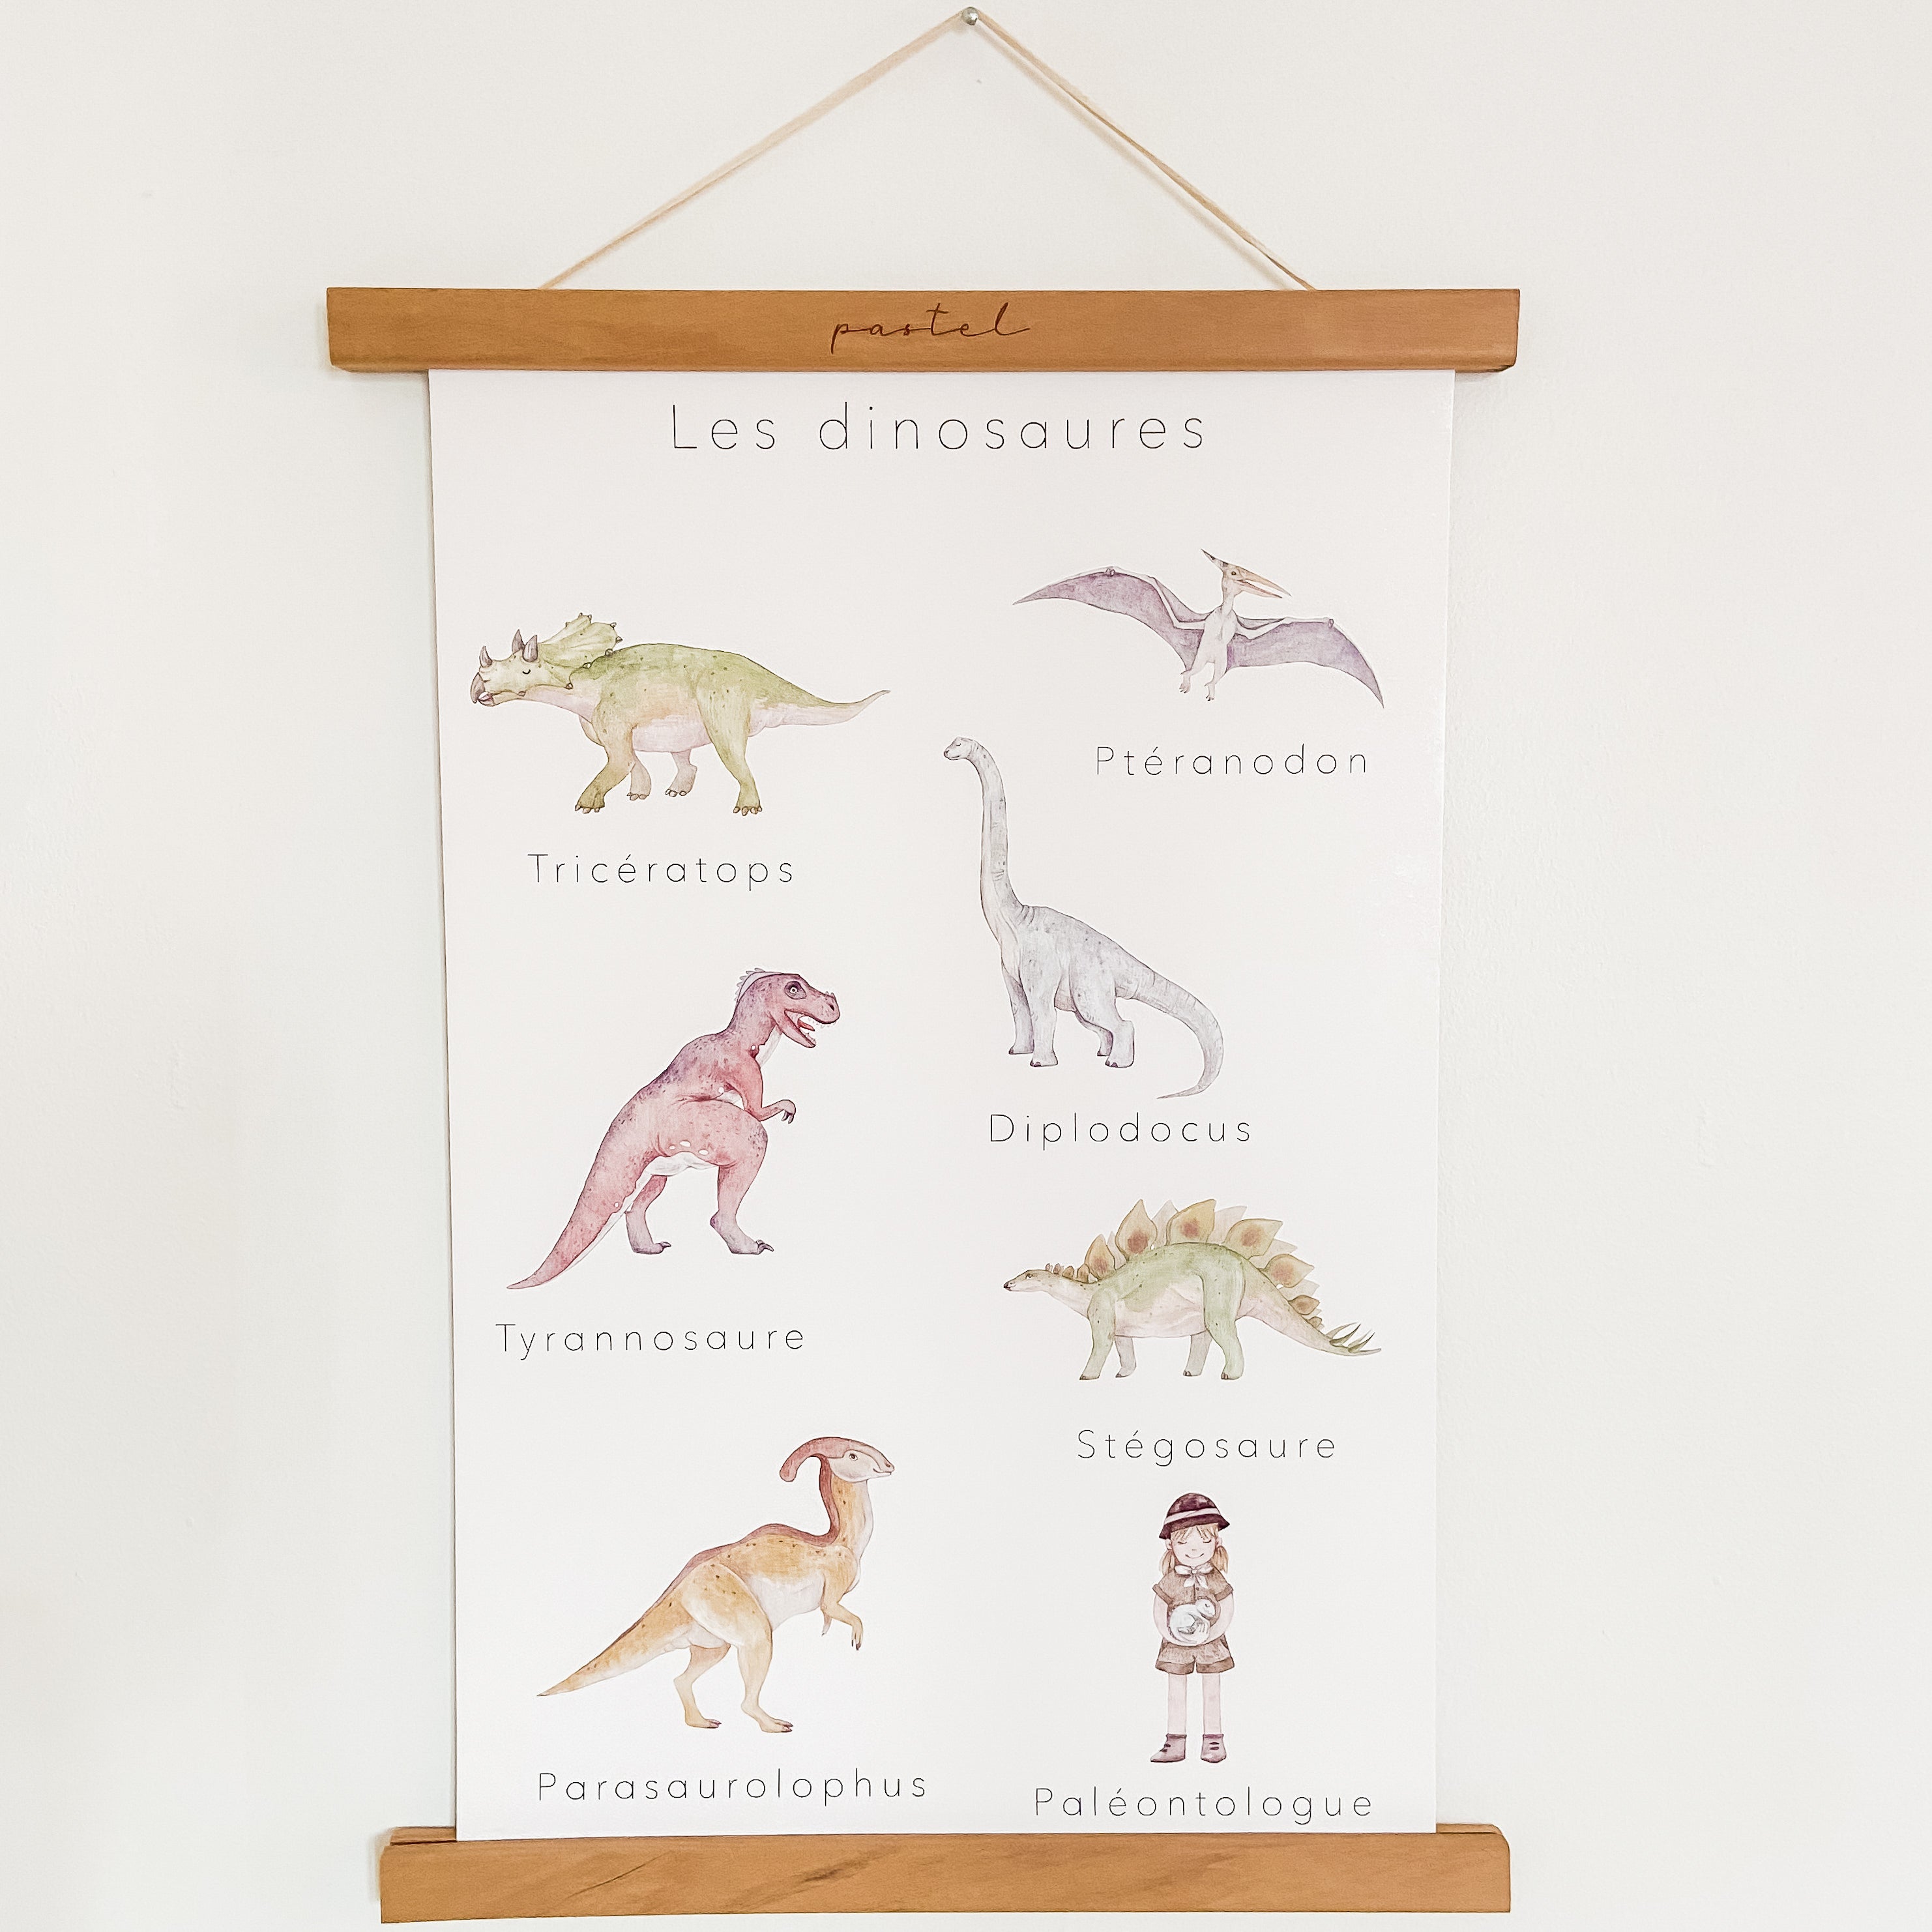 Decorative & Educational Poster "Dinosaurs"